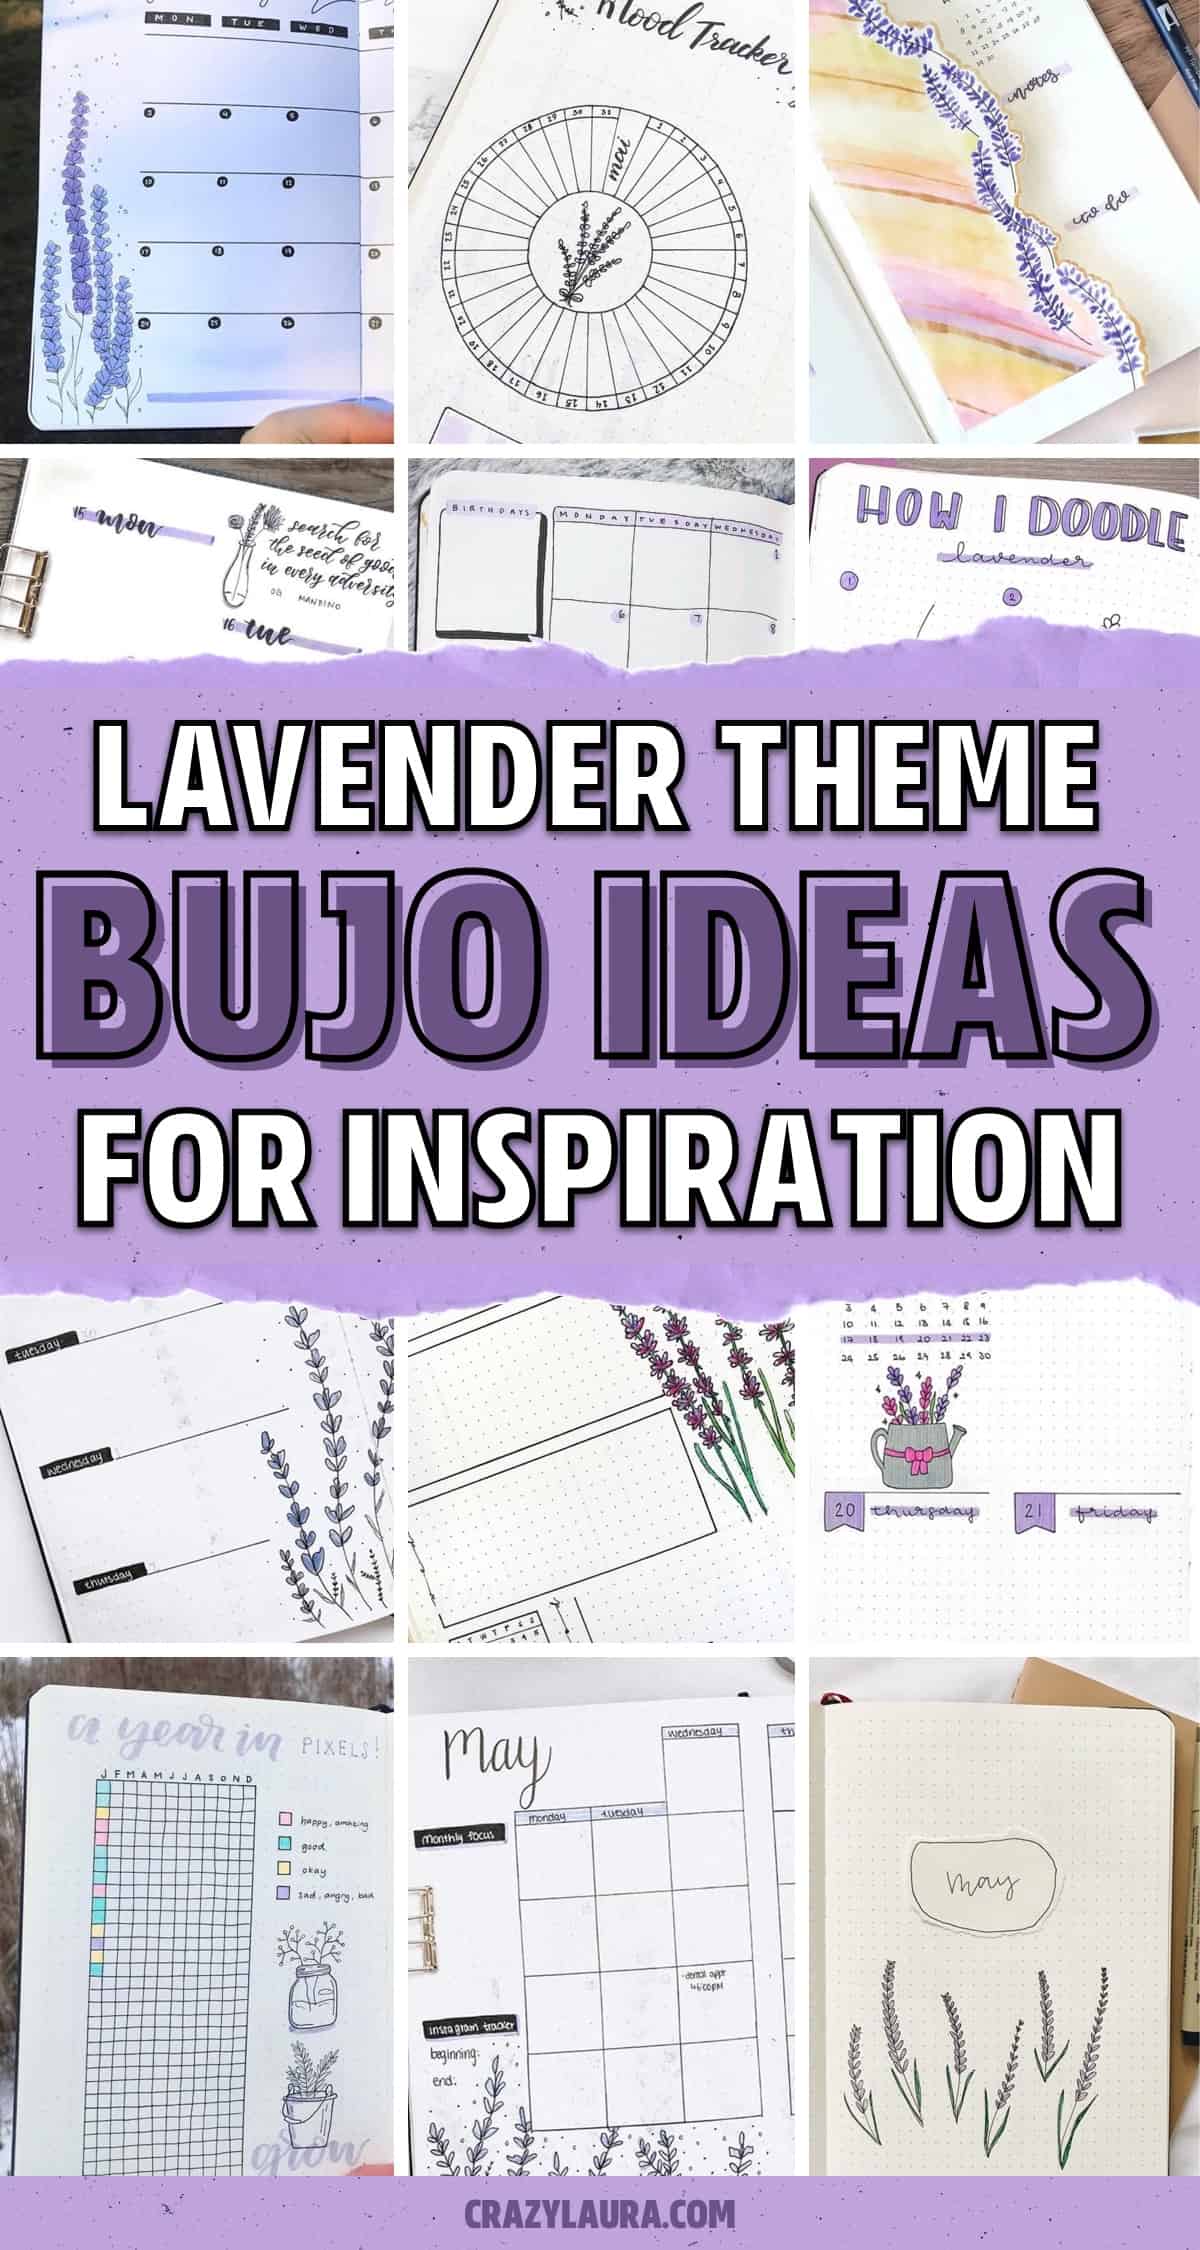 lavender decoration for bujo spreads